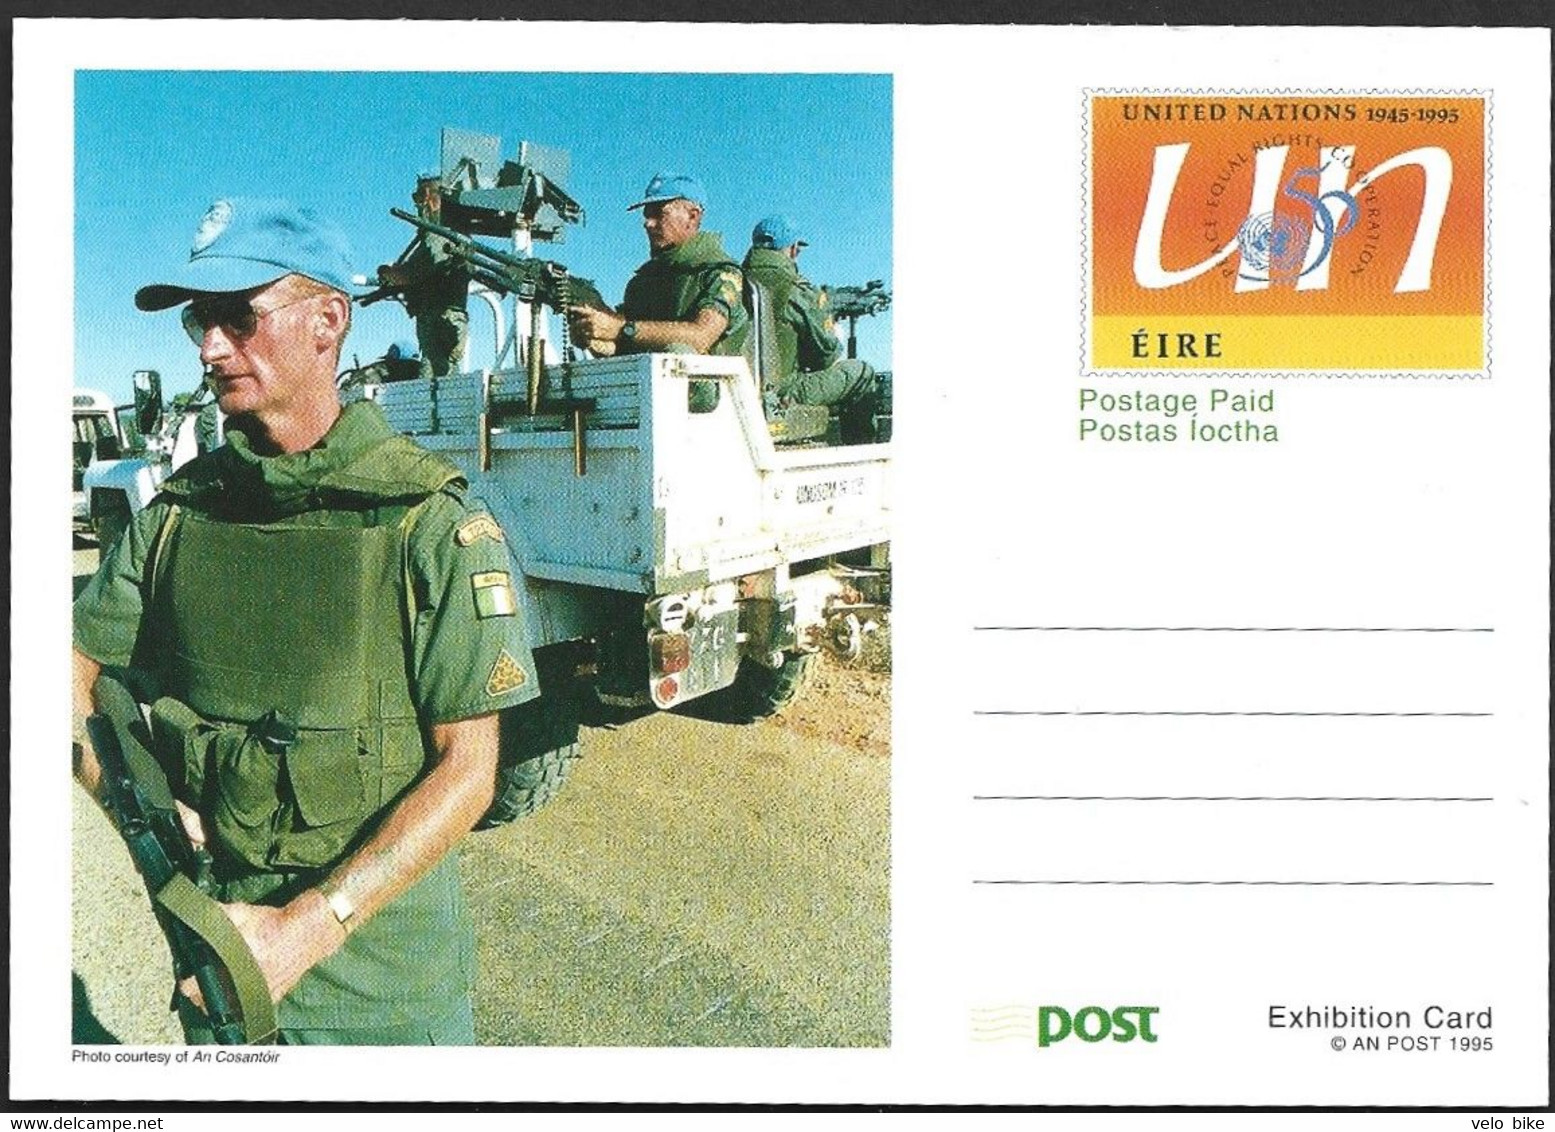 Eire Ireland Postal Stationery Postage Paid Exhibition Card 1995 UN Soldier Uniform Weapon Truck Loggo Globe Peace Equal - Interi Postali